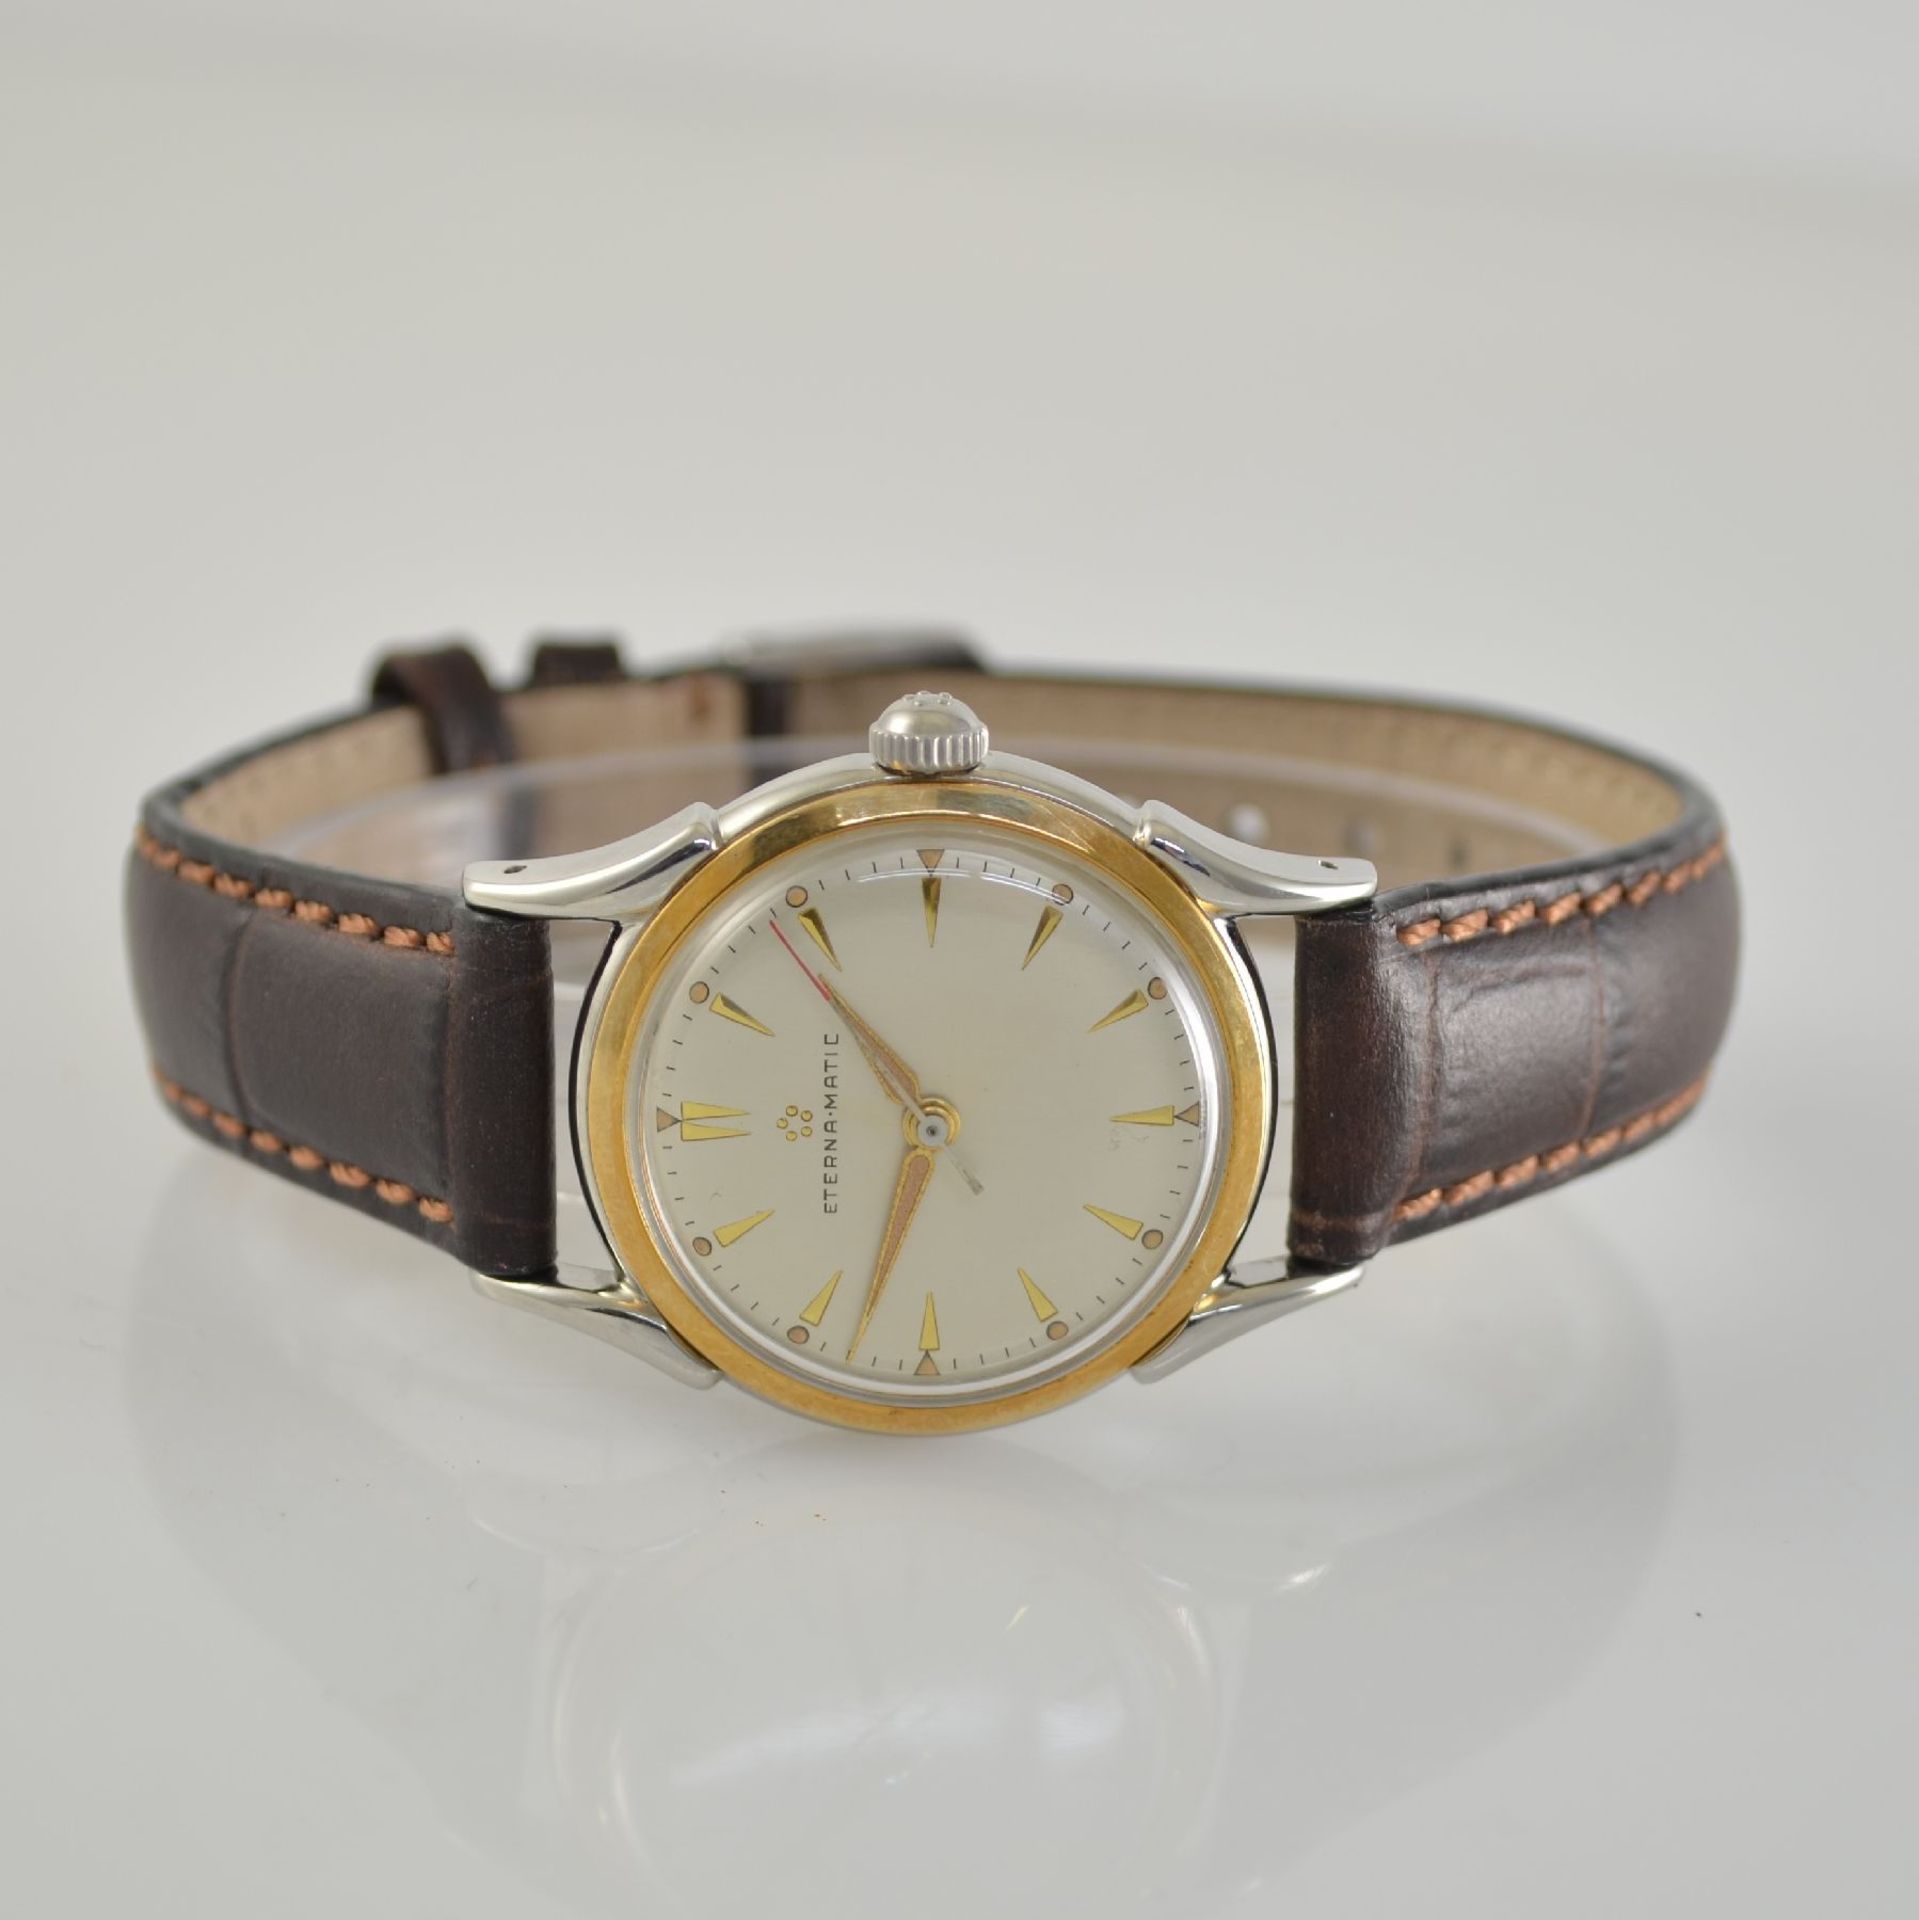 ETERNA-MATIC 2 wristwatches in steel & steel/ gold, Switzerland around 1955, self winding, 1 x